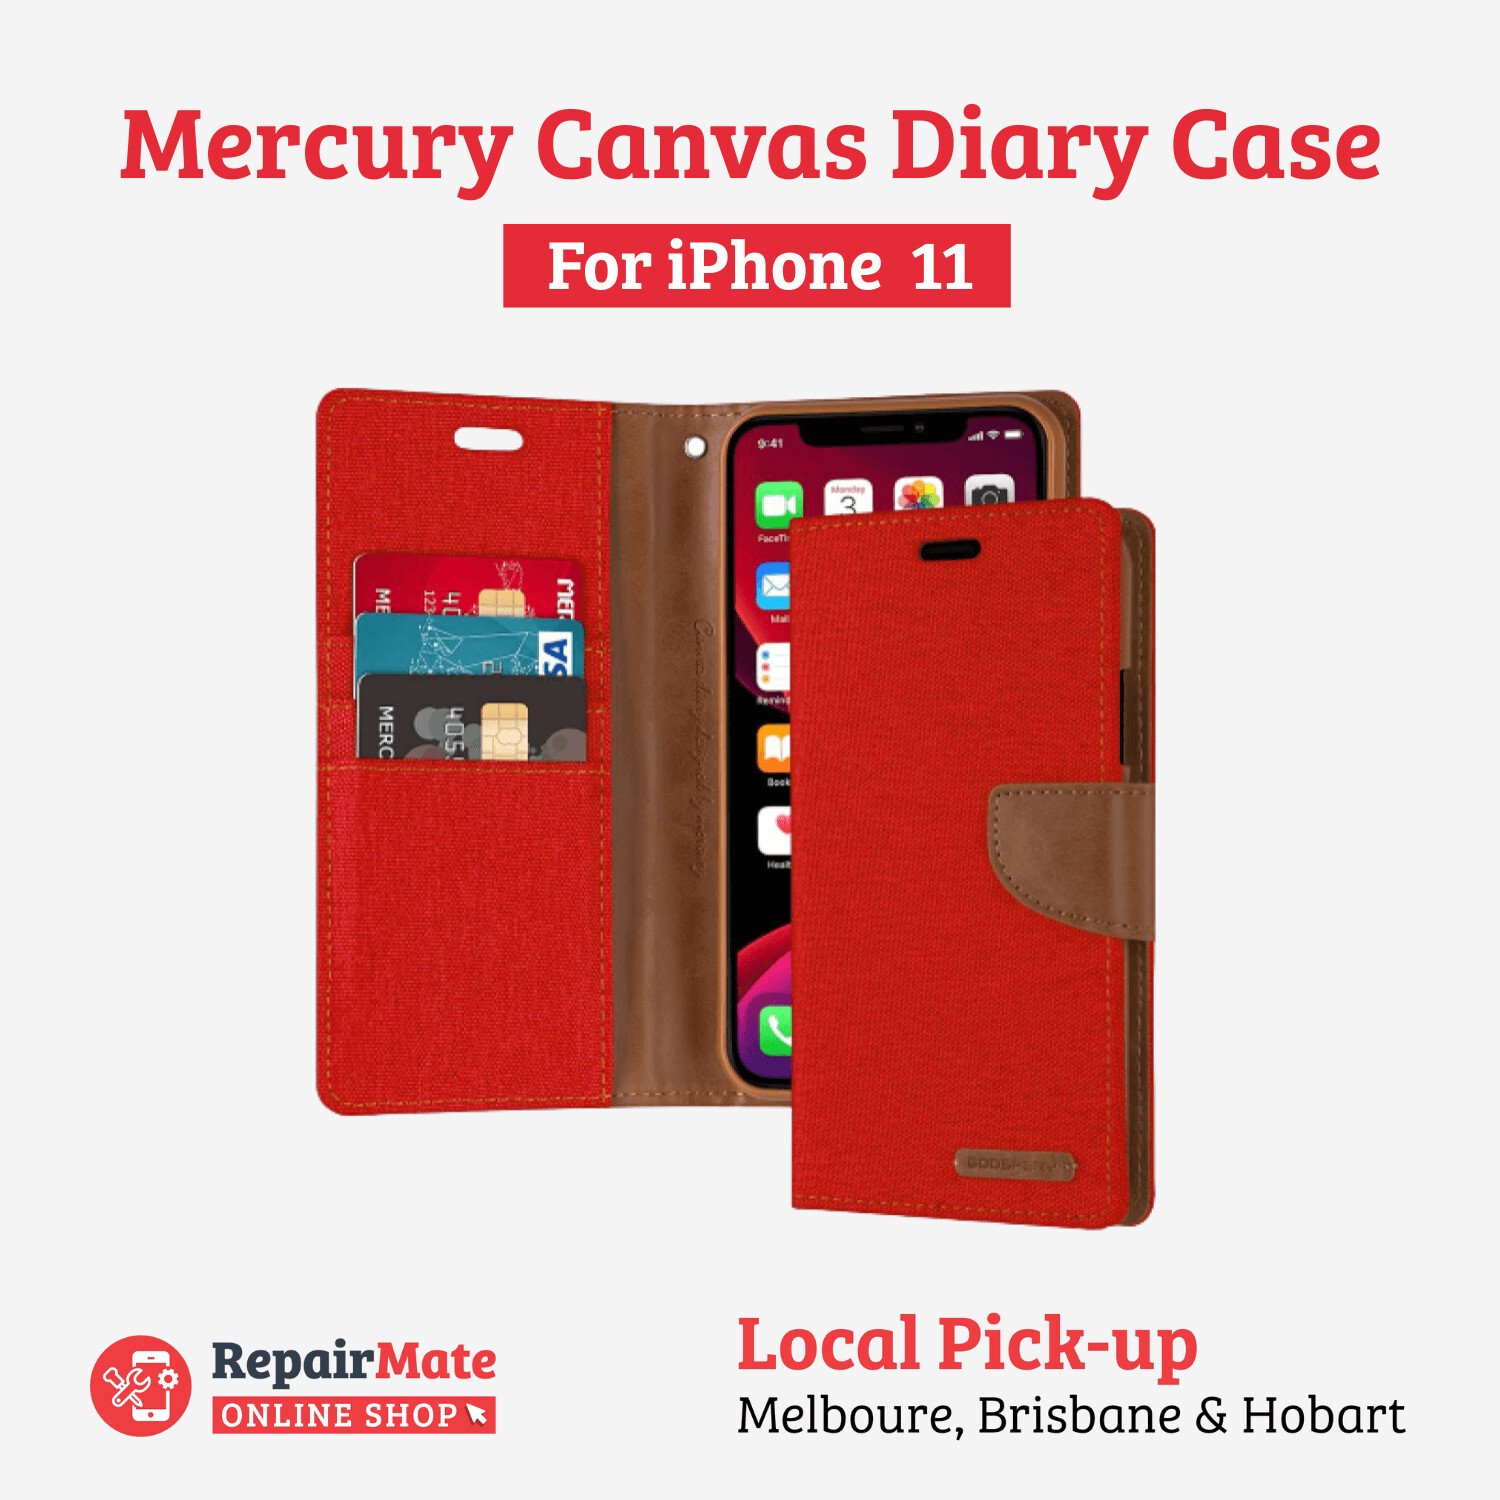 iPhone 11 Mercury Canvas Foldable Diary Case